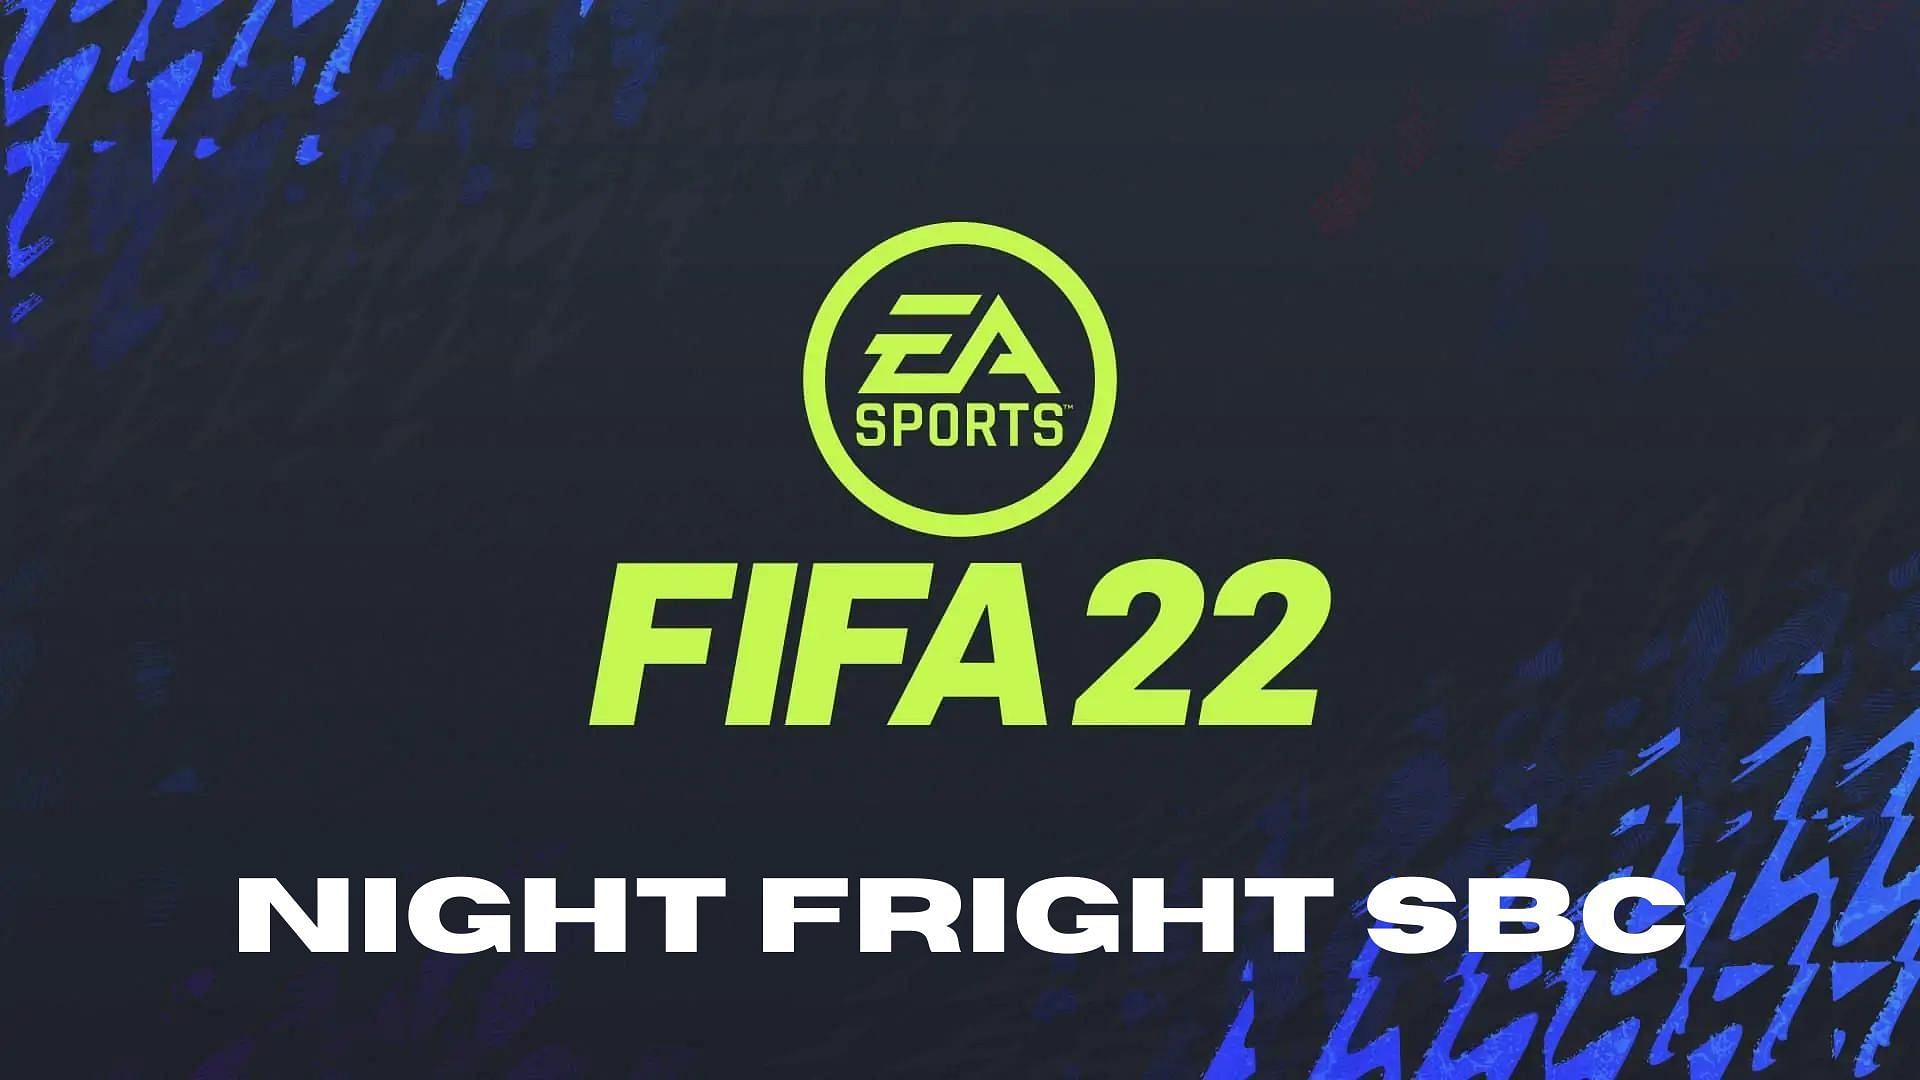 Night Fright SBC is the latest SBC in FIFA 22 (Image via Sportskeeda)